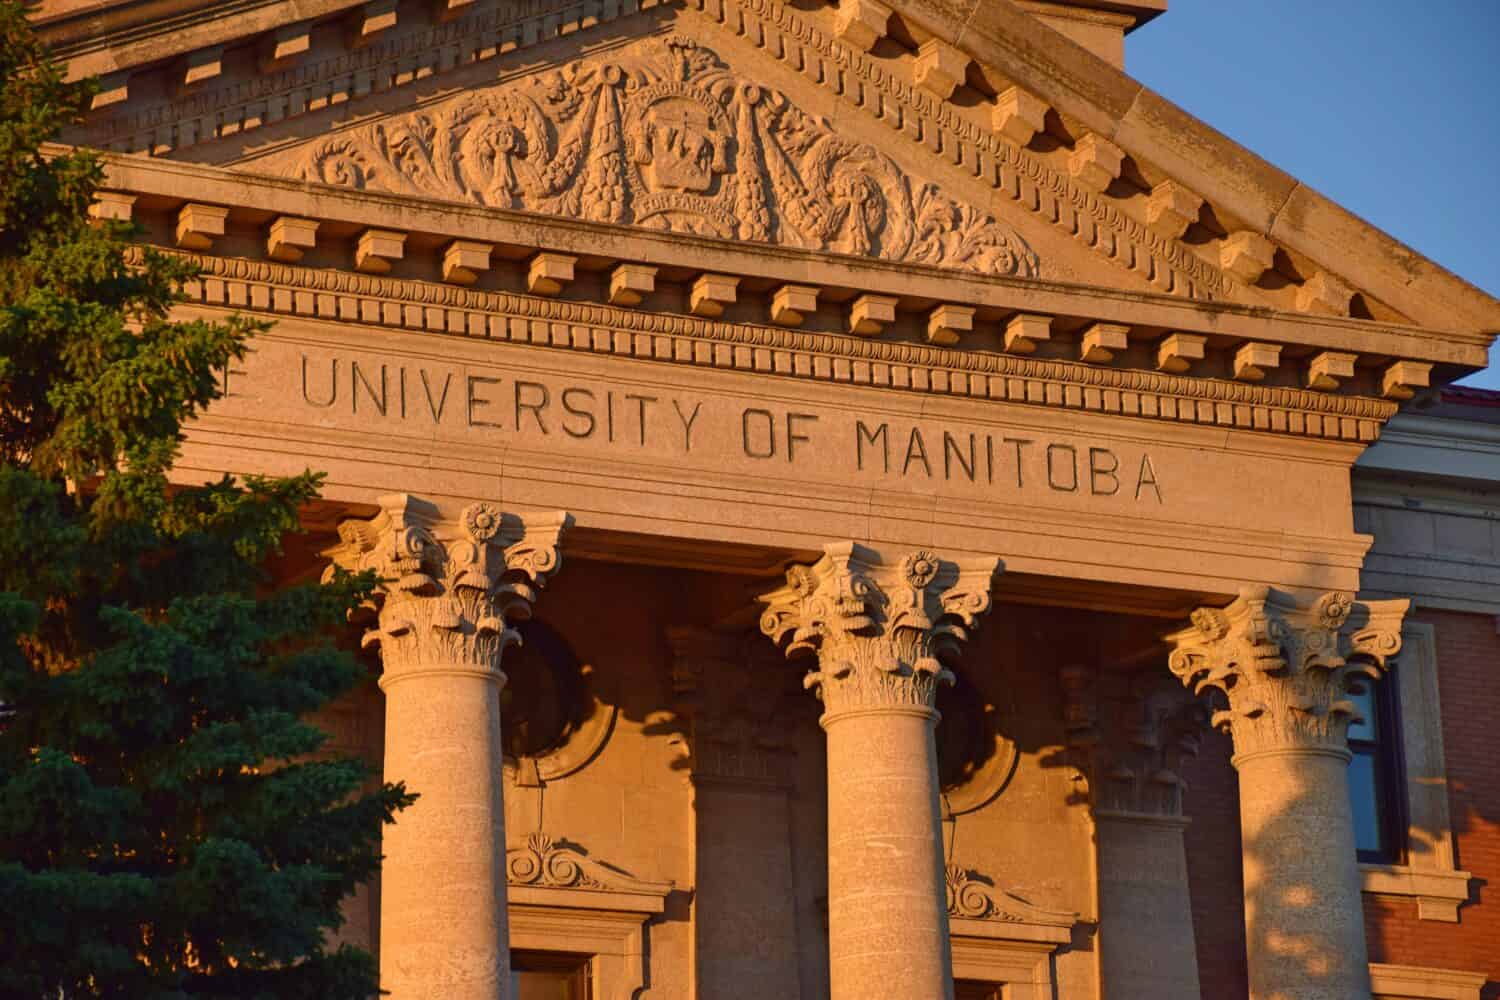 University of Manitoba Administration